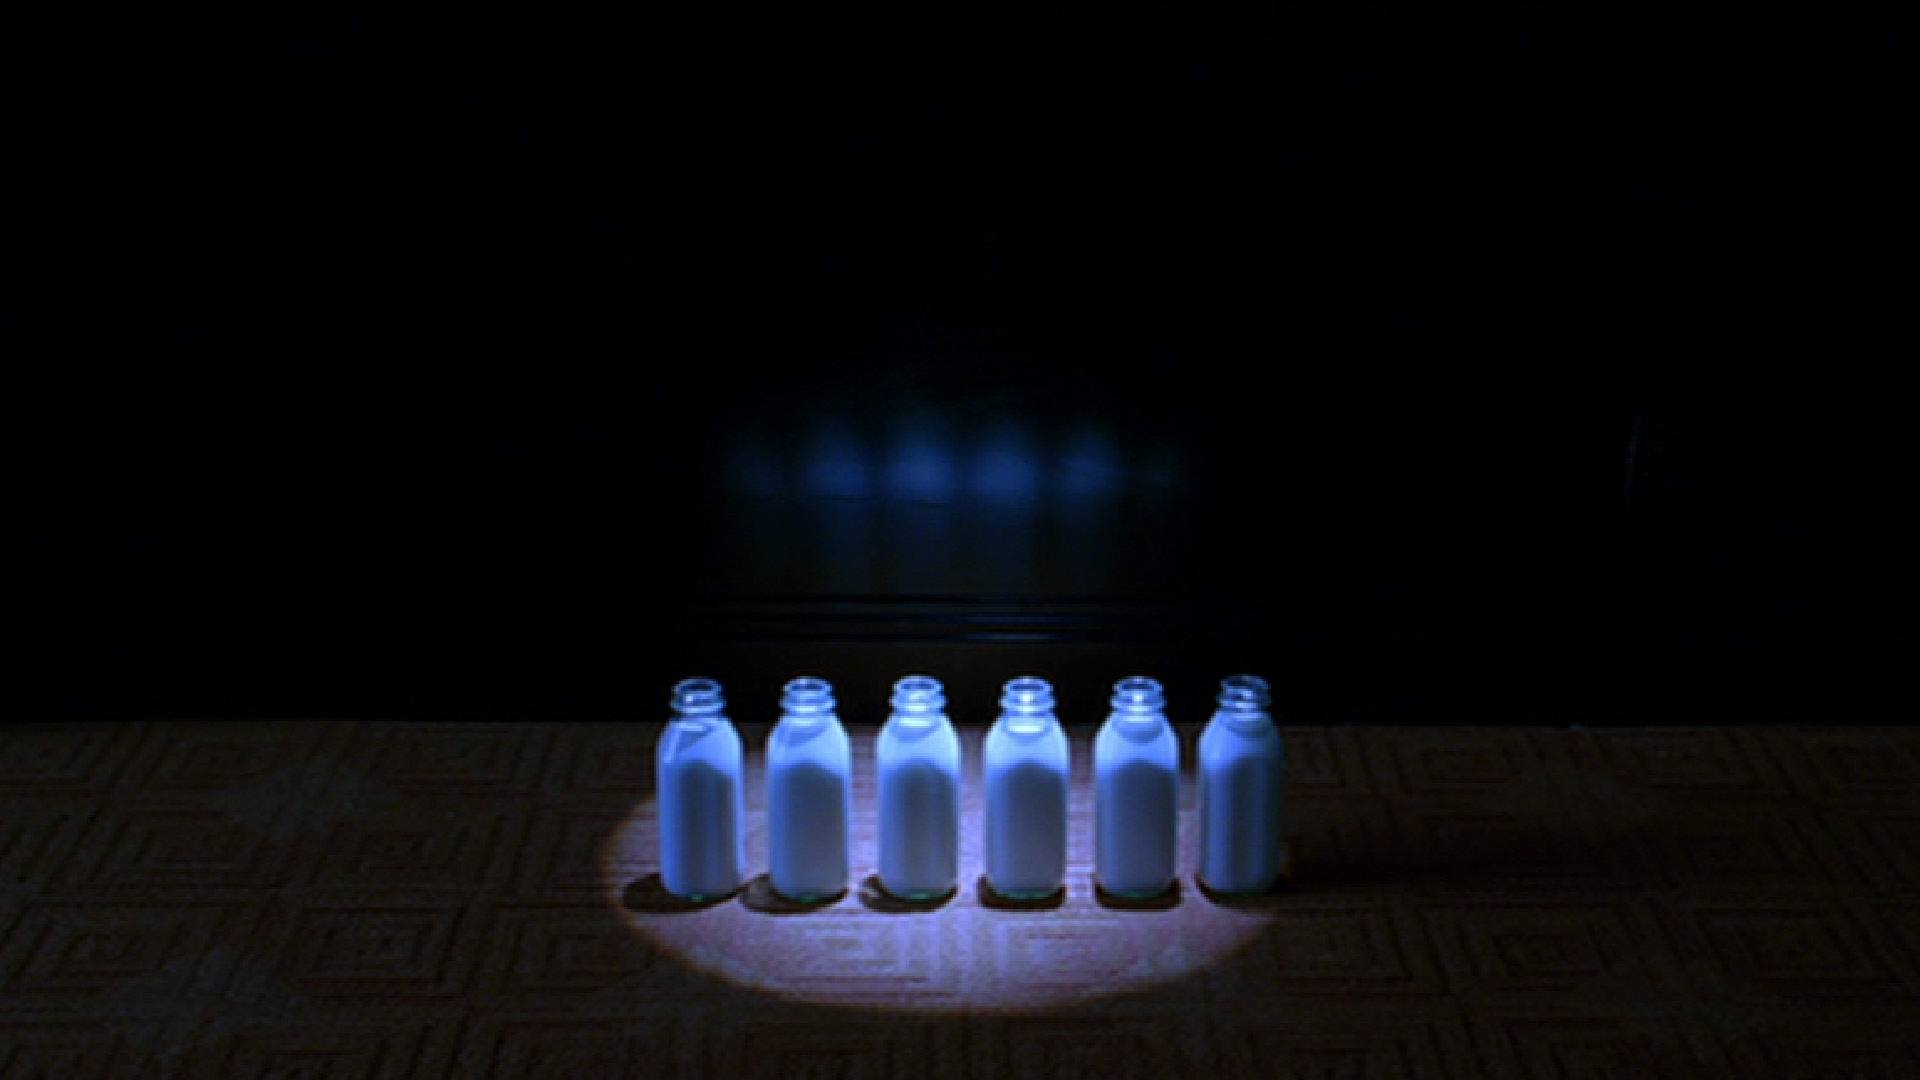 THE AVIATOR film still of six bottles of milk on a table